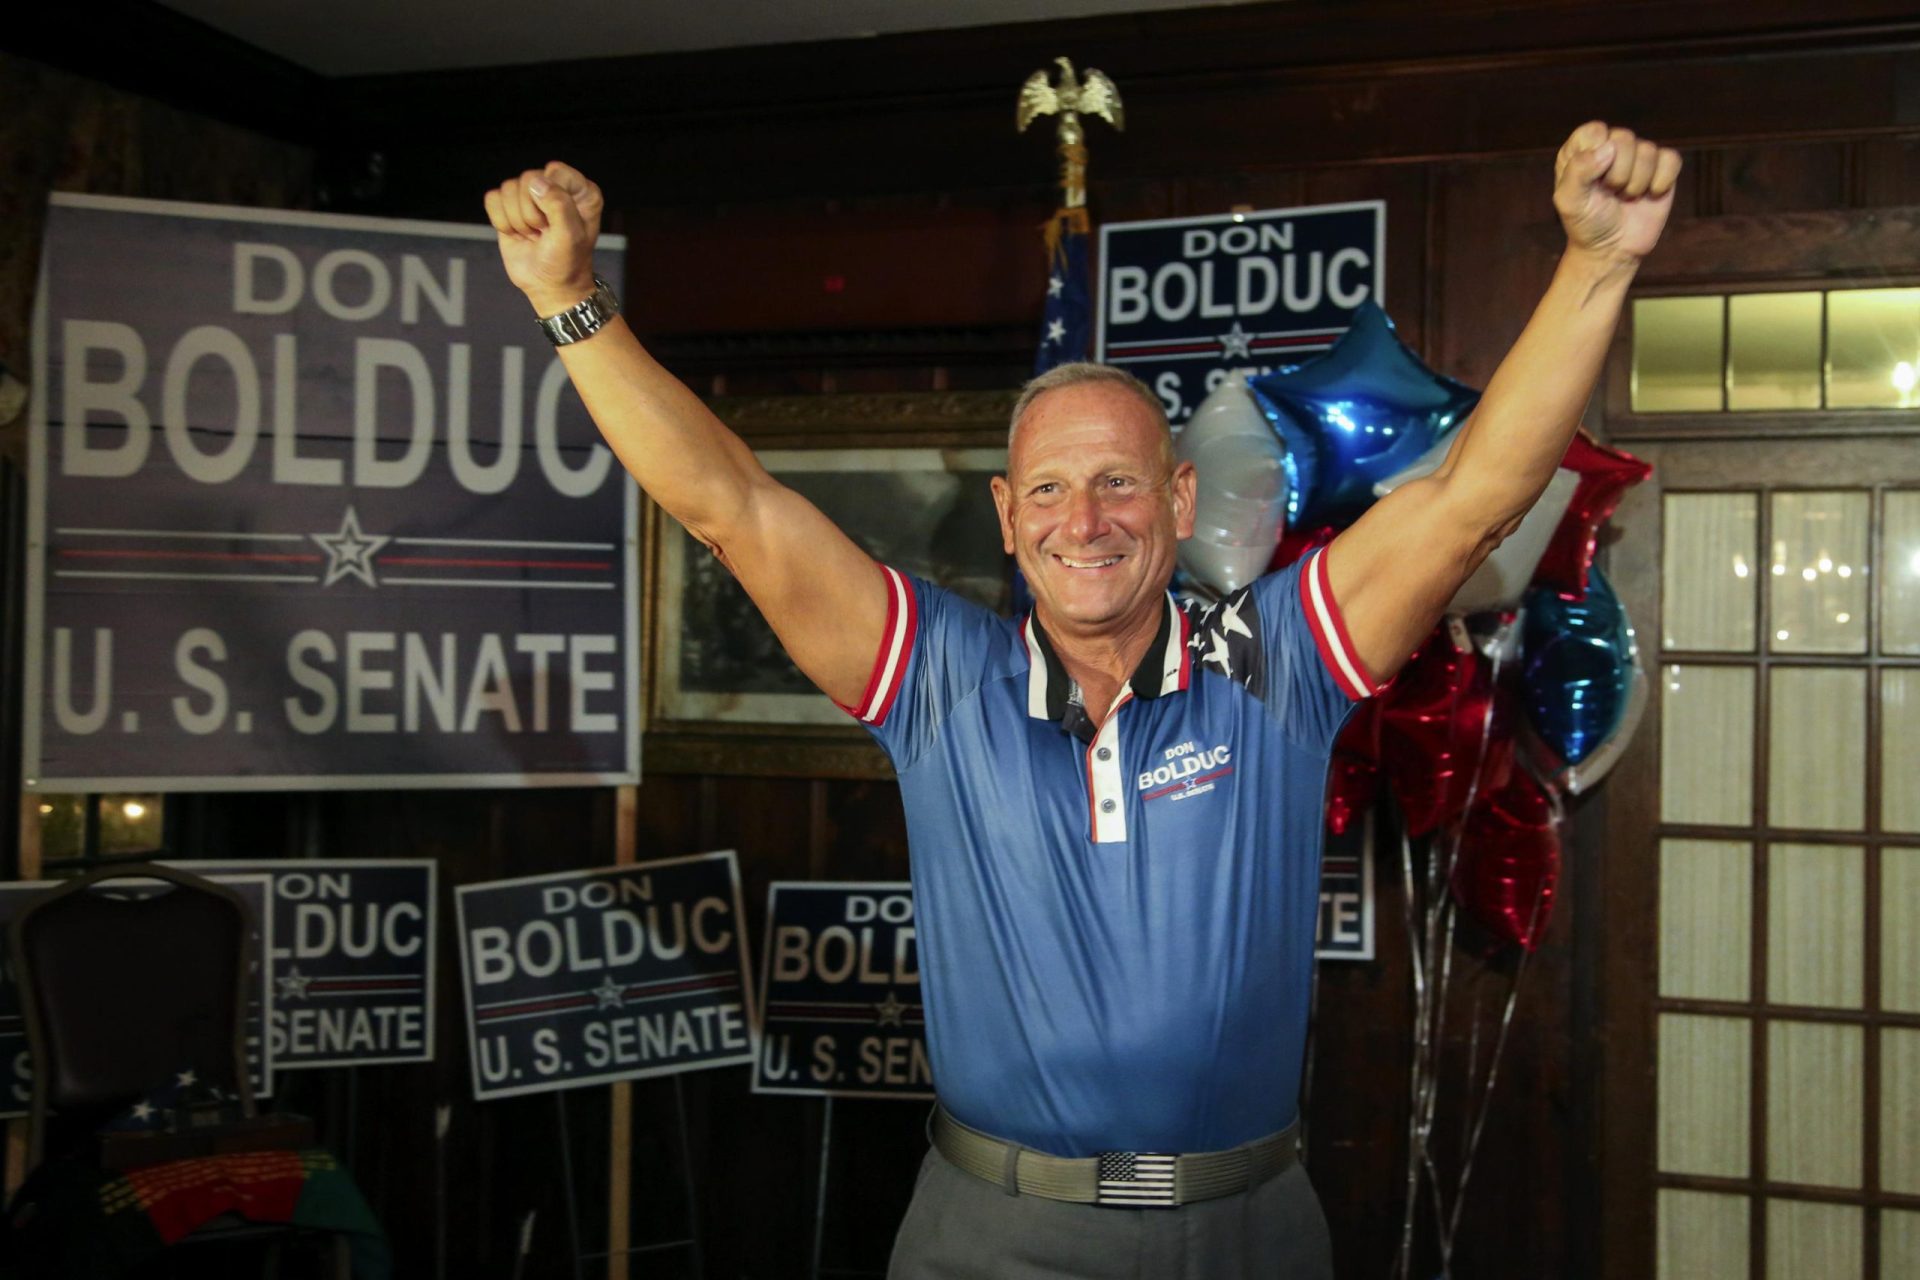 El negacionista Bolduc gana la carrera por el Senado del Partido Republicano de New Hampshire